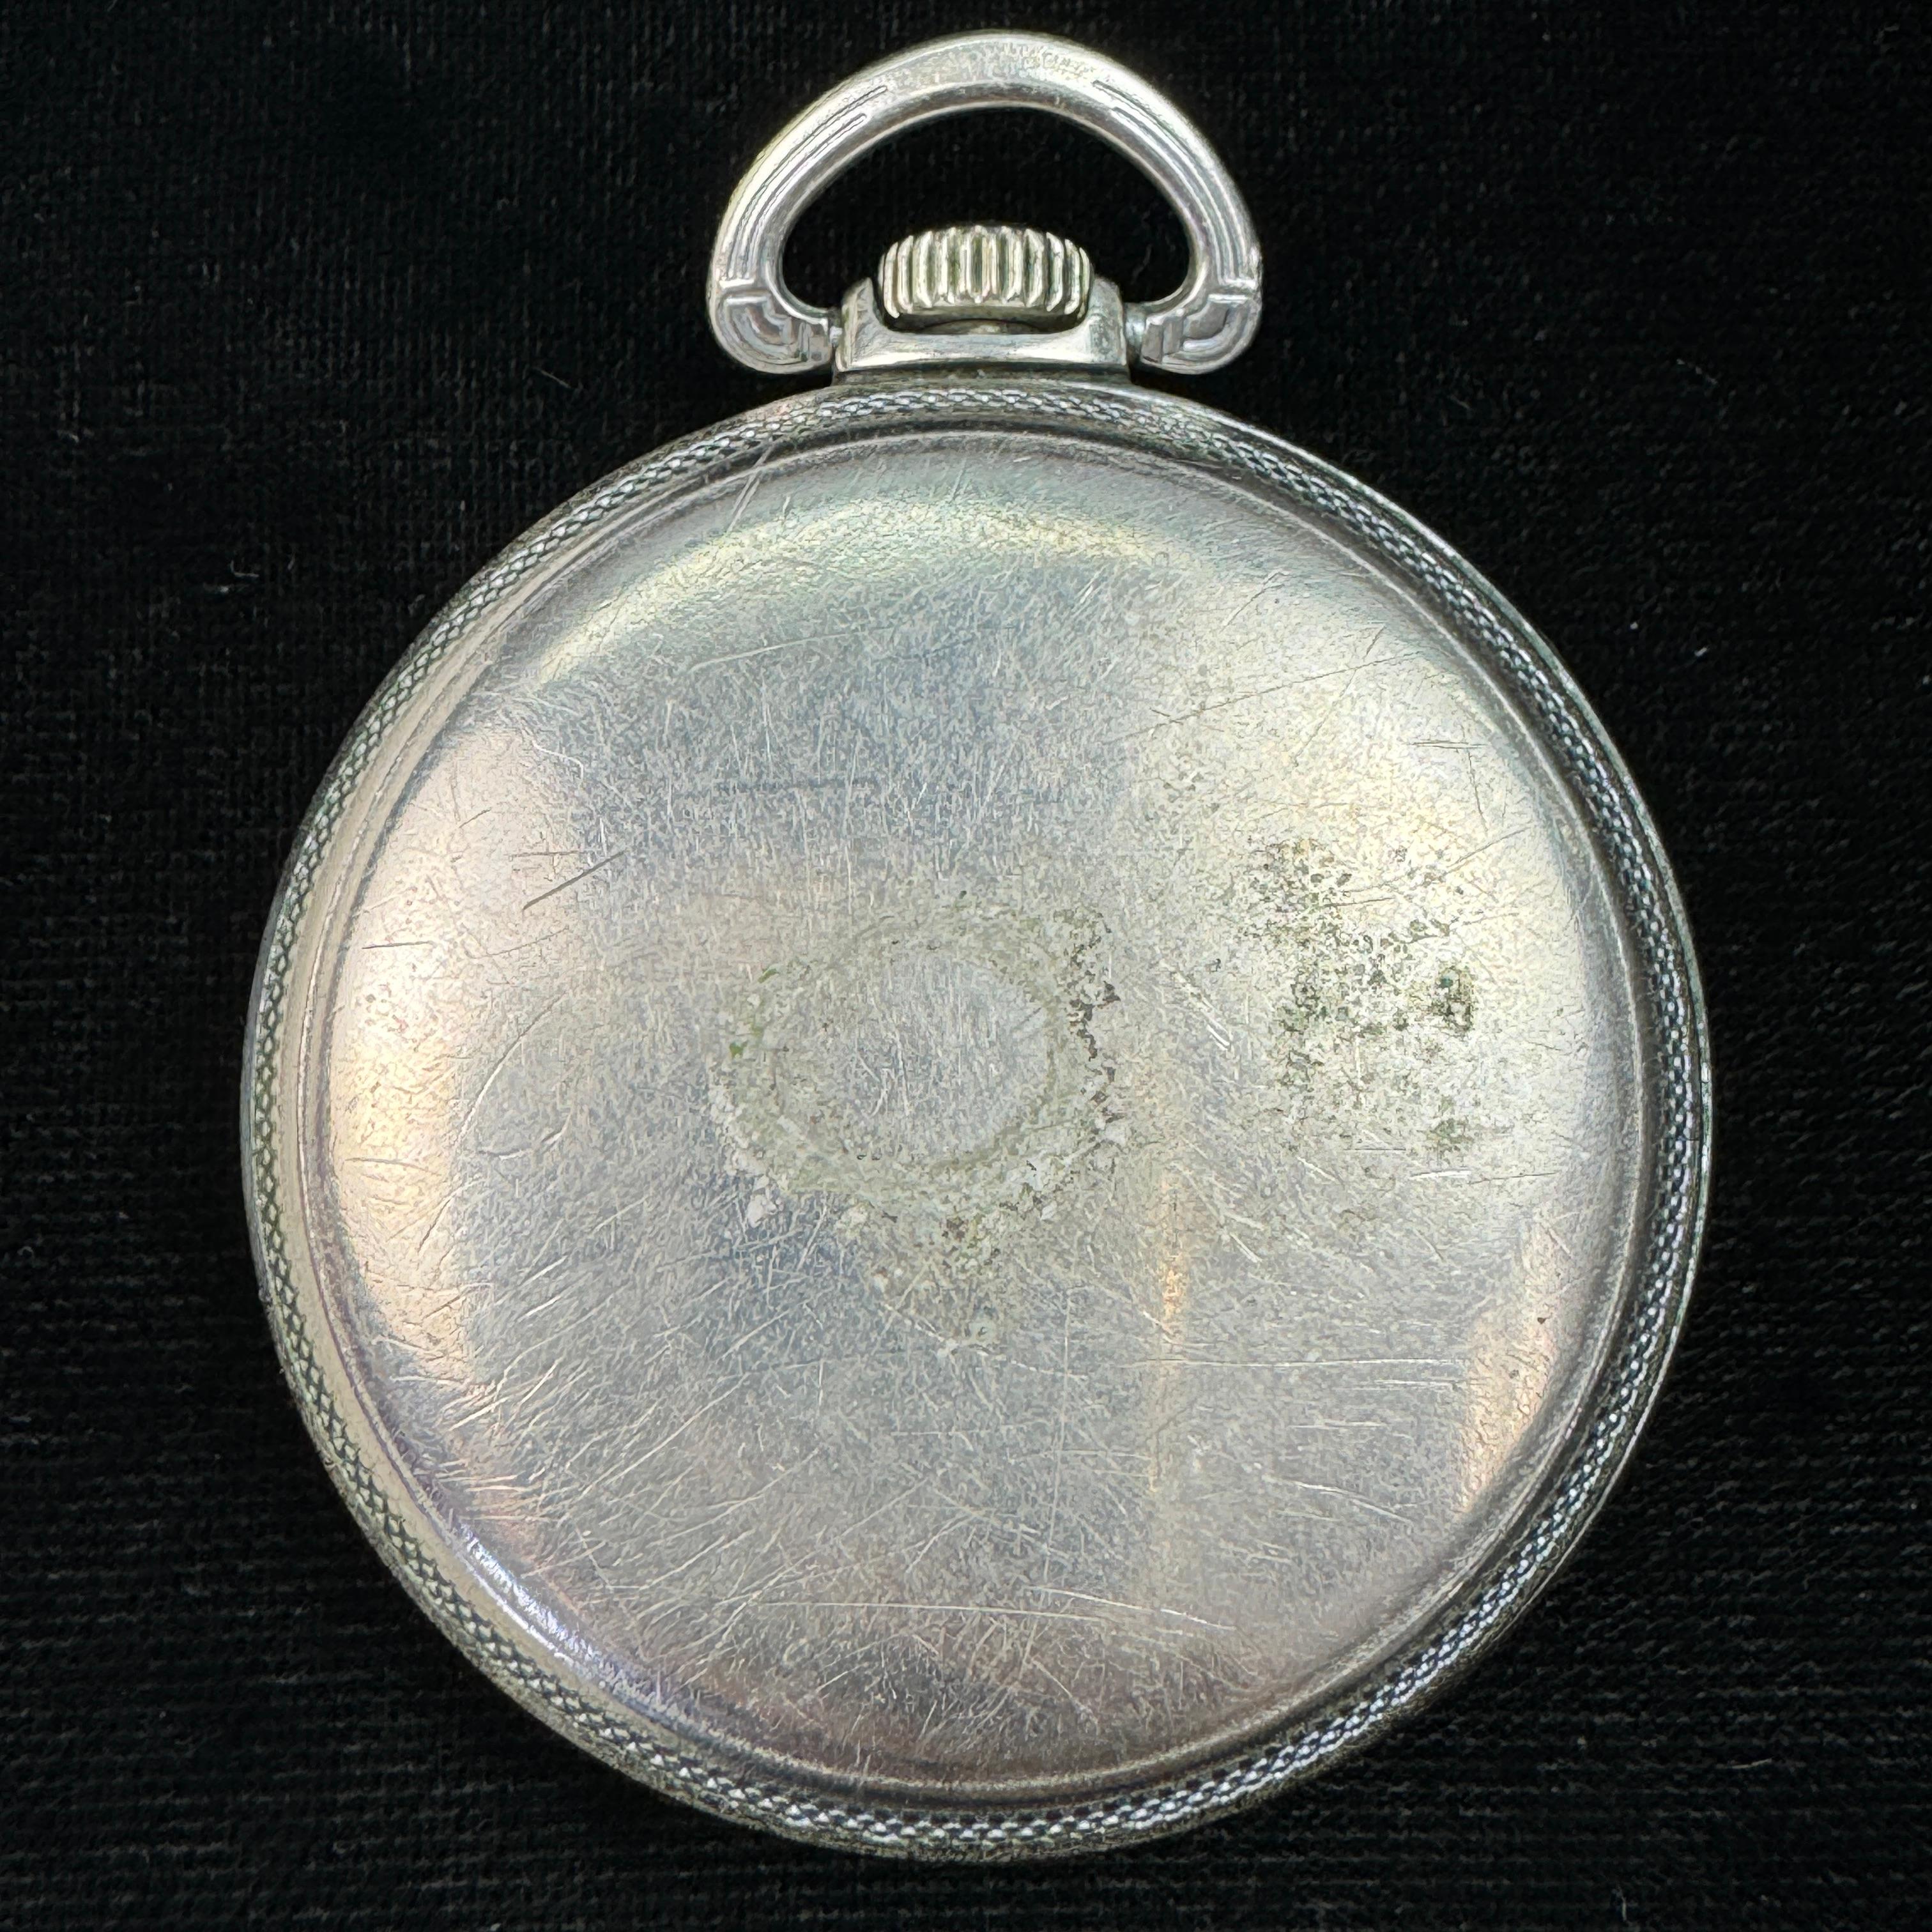 Circa 1938 7-jewel Elgin model 7 open face pocket watch